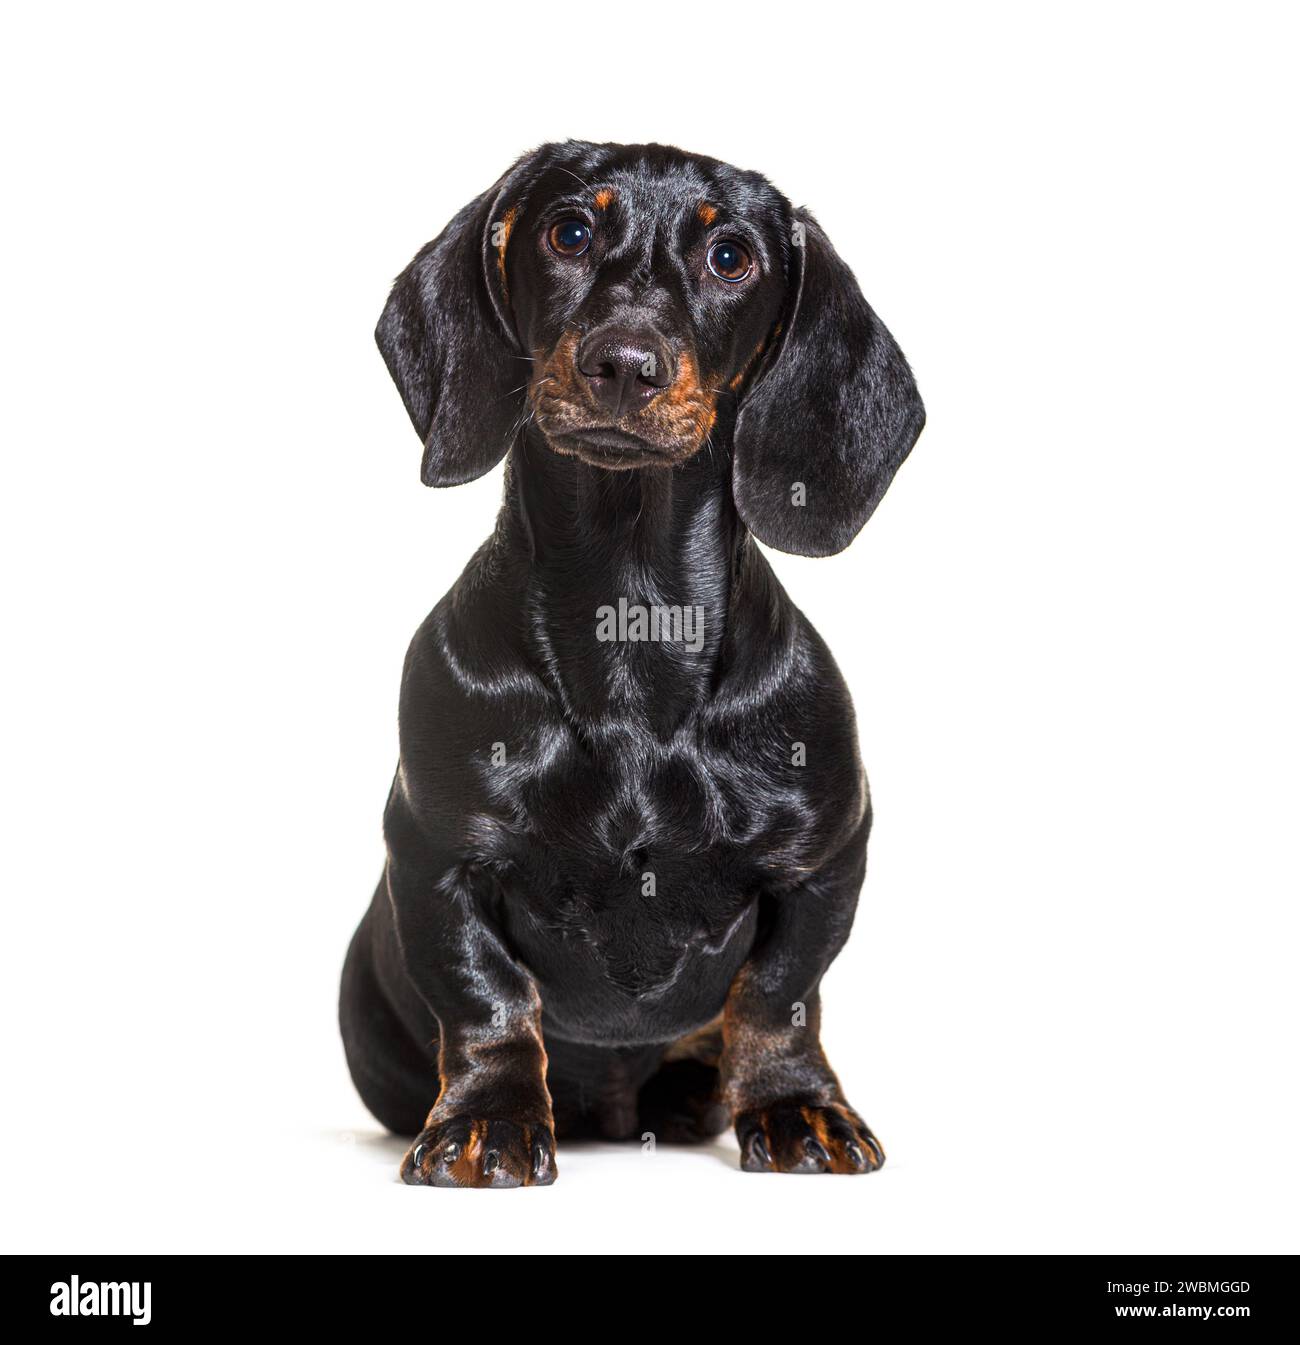 Dachshund dog, sitting in front of white background Stock Photo